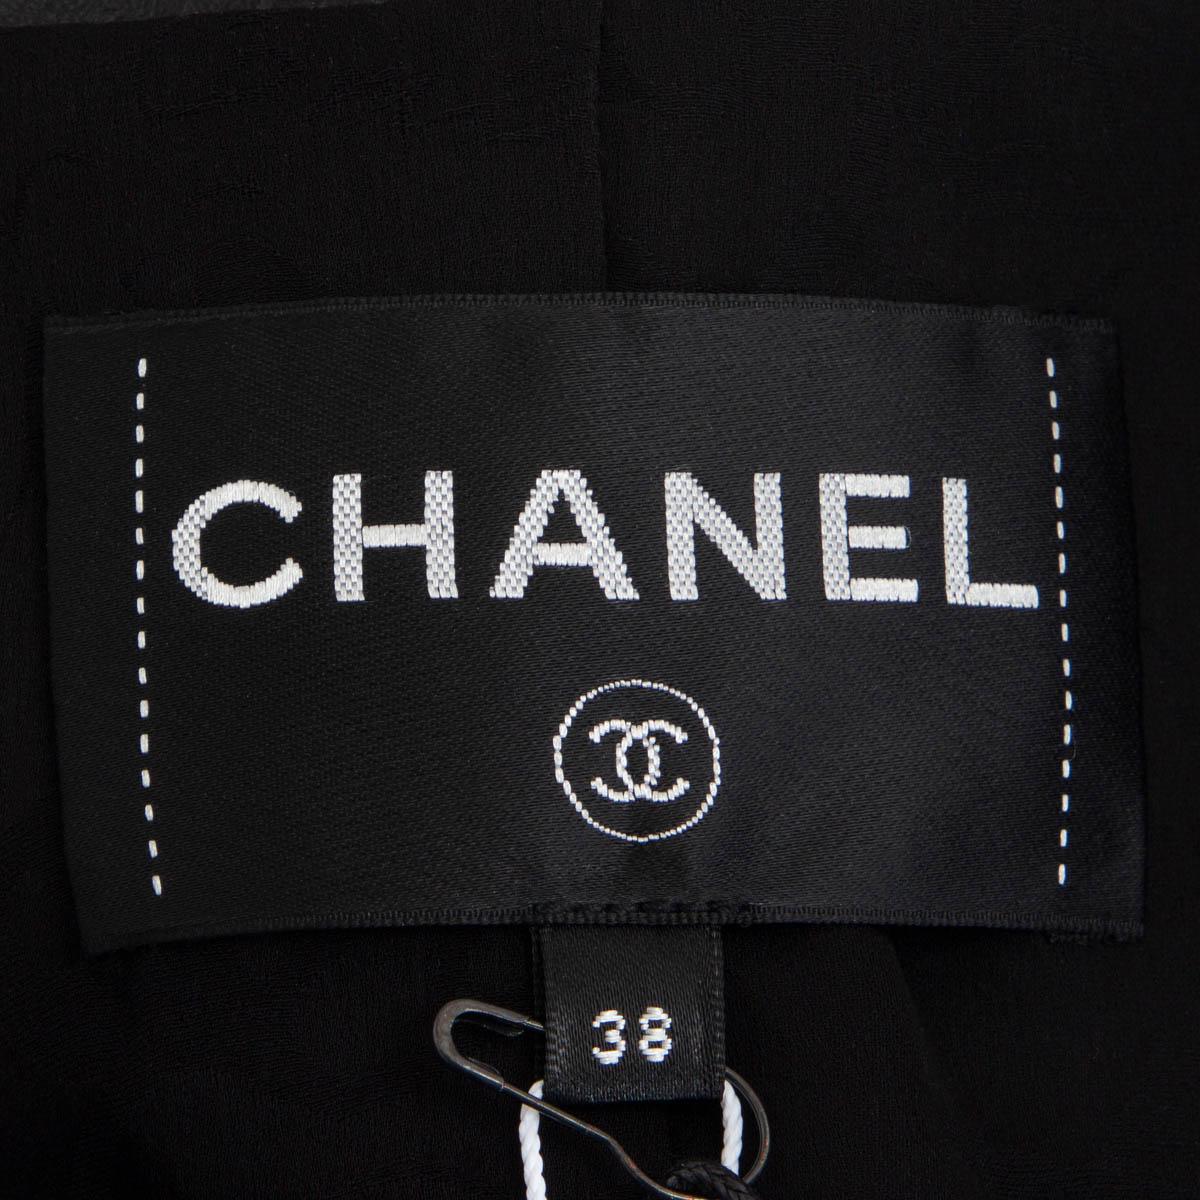 CHANEL - Veste en cuir stretch noire et bleue « METIER'S HAMBURG », 38 S, 2018 en vente 3